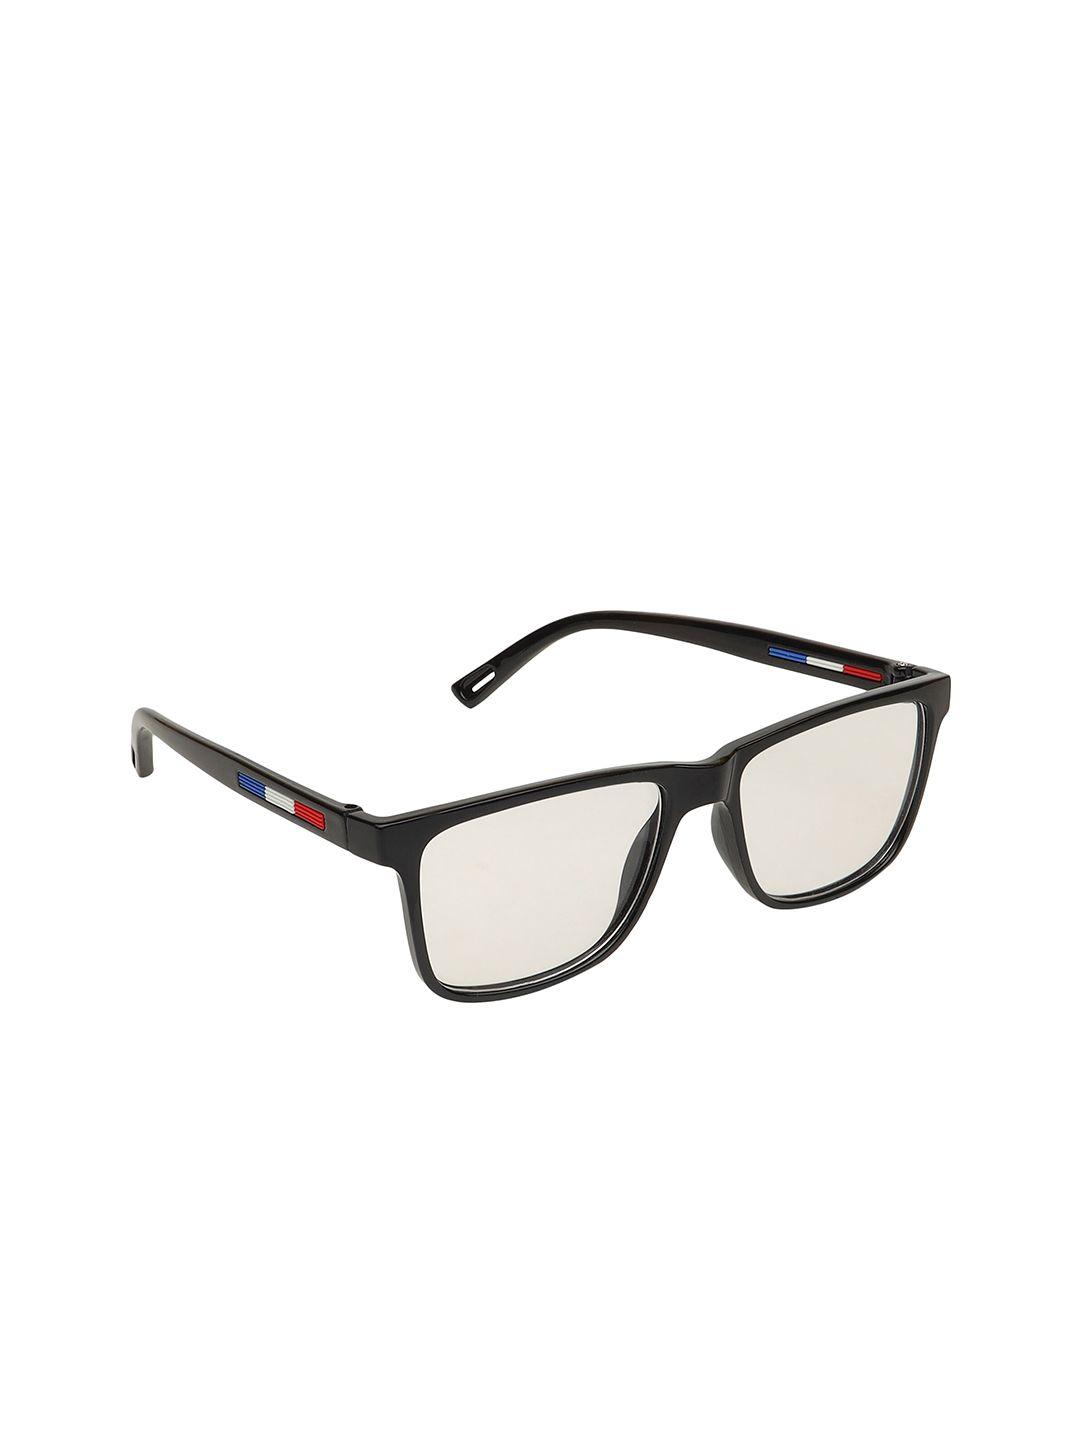 scaglia unisex clear lens & black rectangle m-517 anti-reflective sunglasses model 517_bc